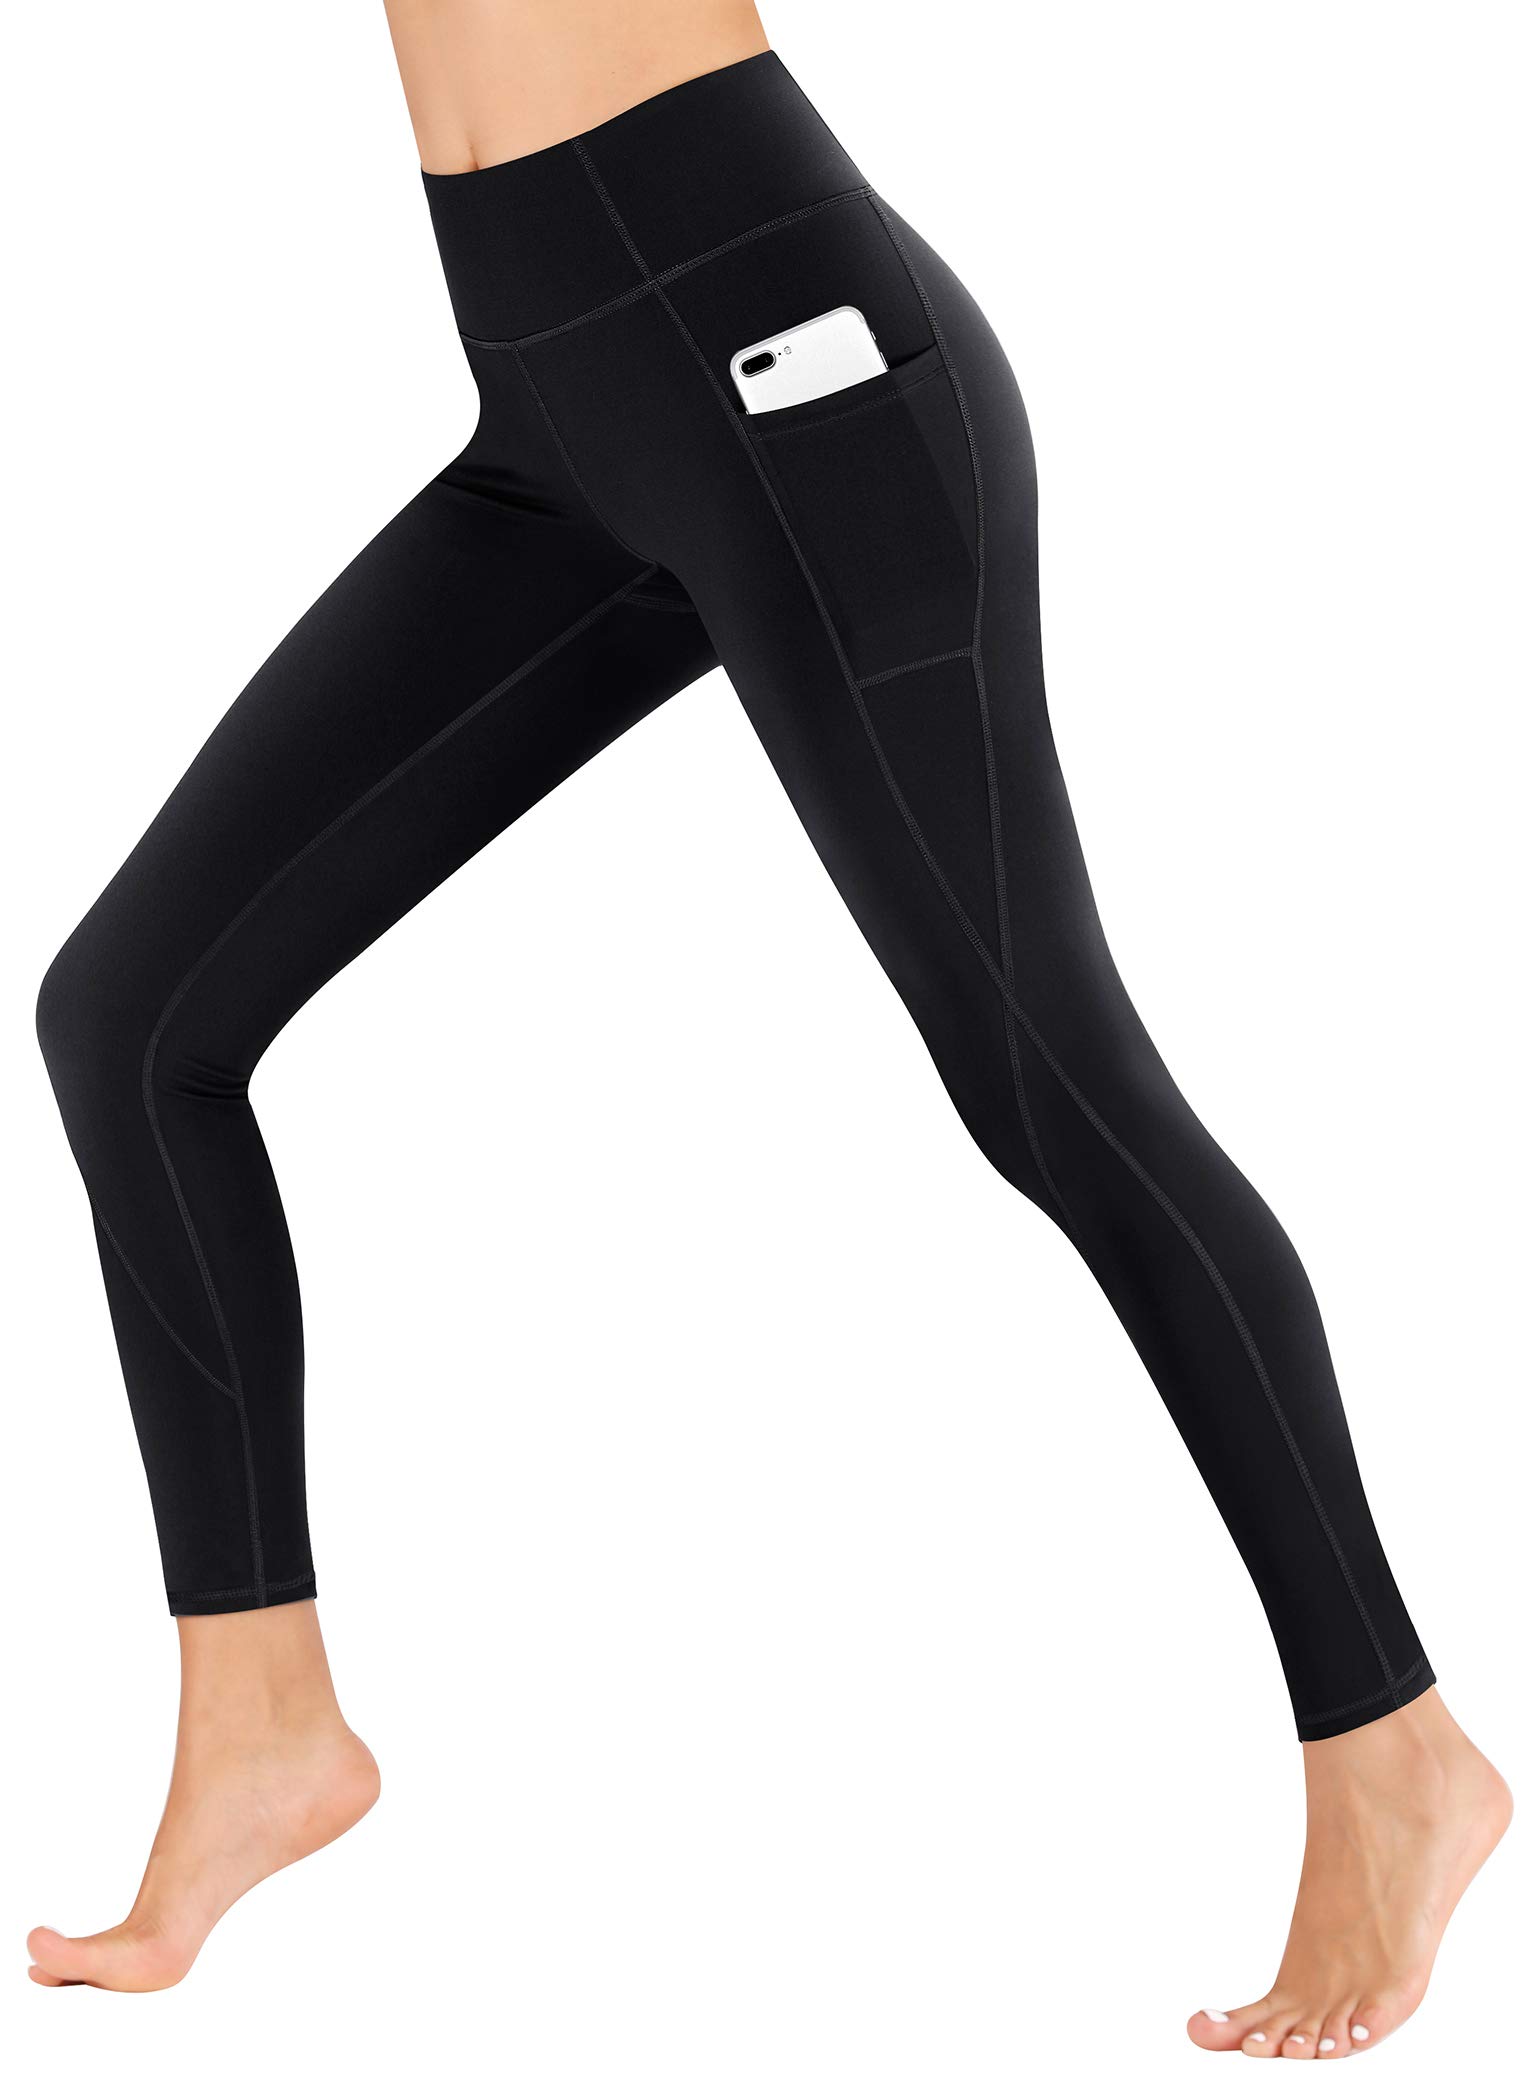 PHISOCKAT 2 Pack High Waist Yoga Pants with Pockets 4 Way Stretch Yoga  Leggings (Black+Grey, Medium)